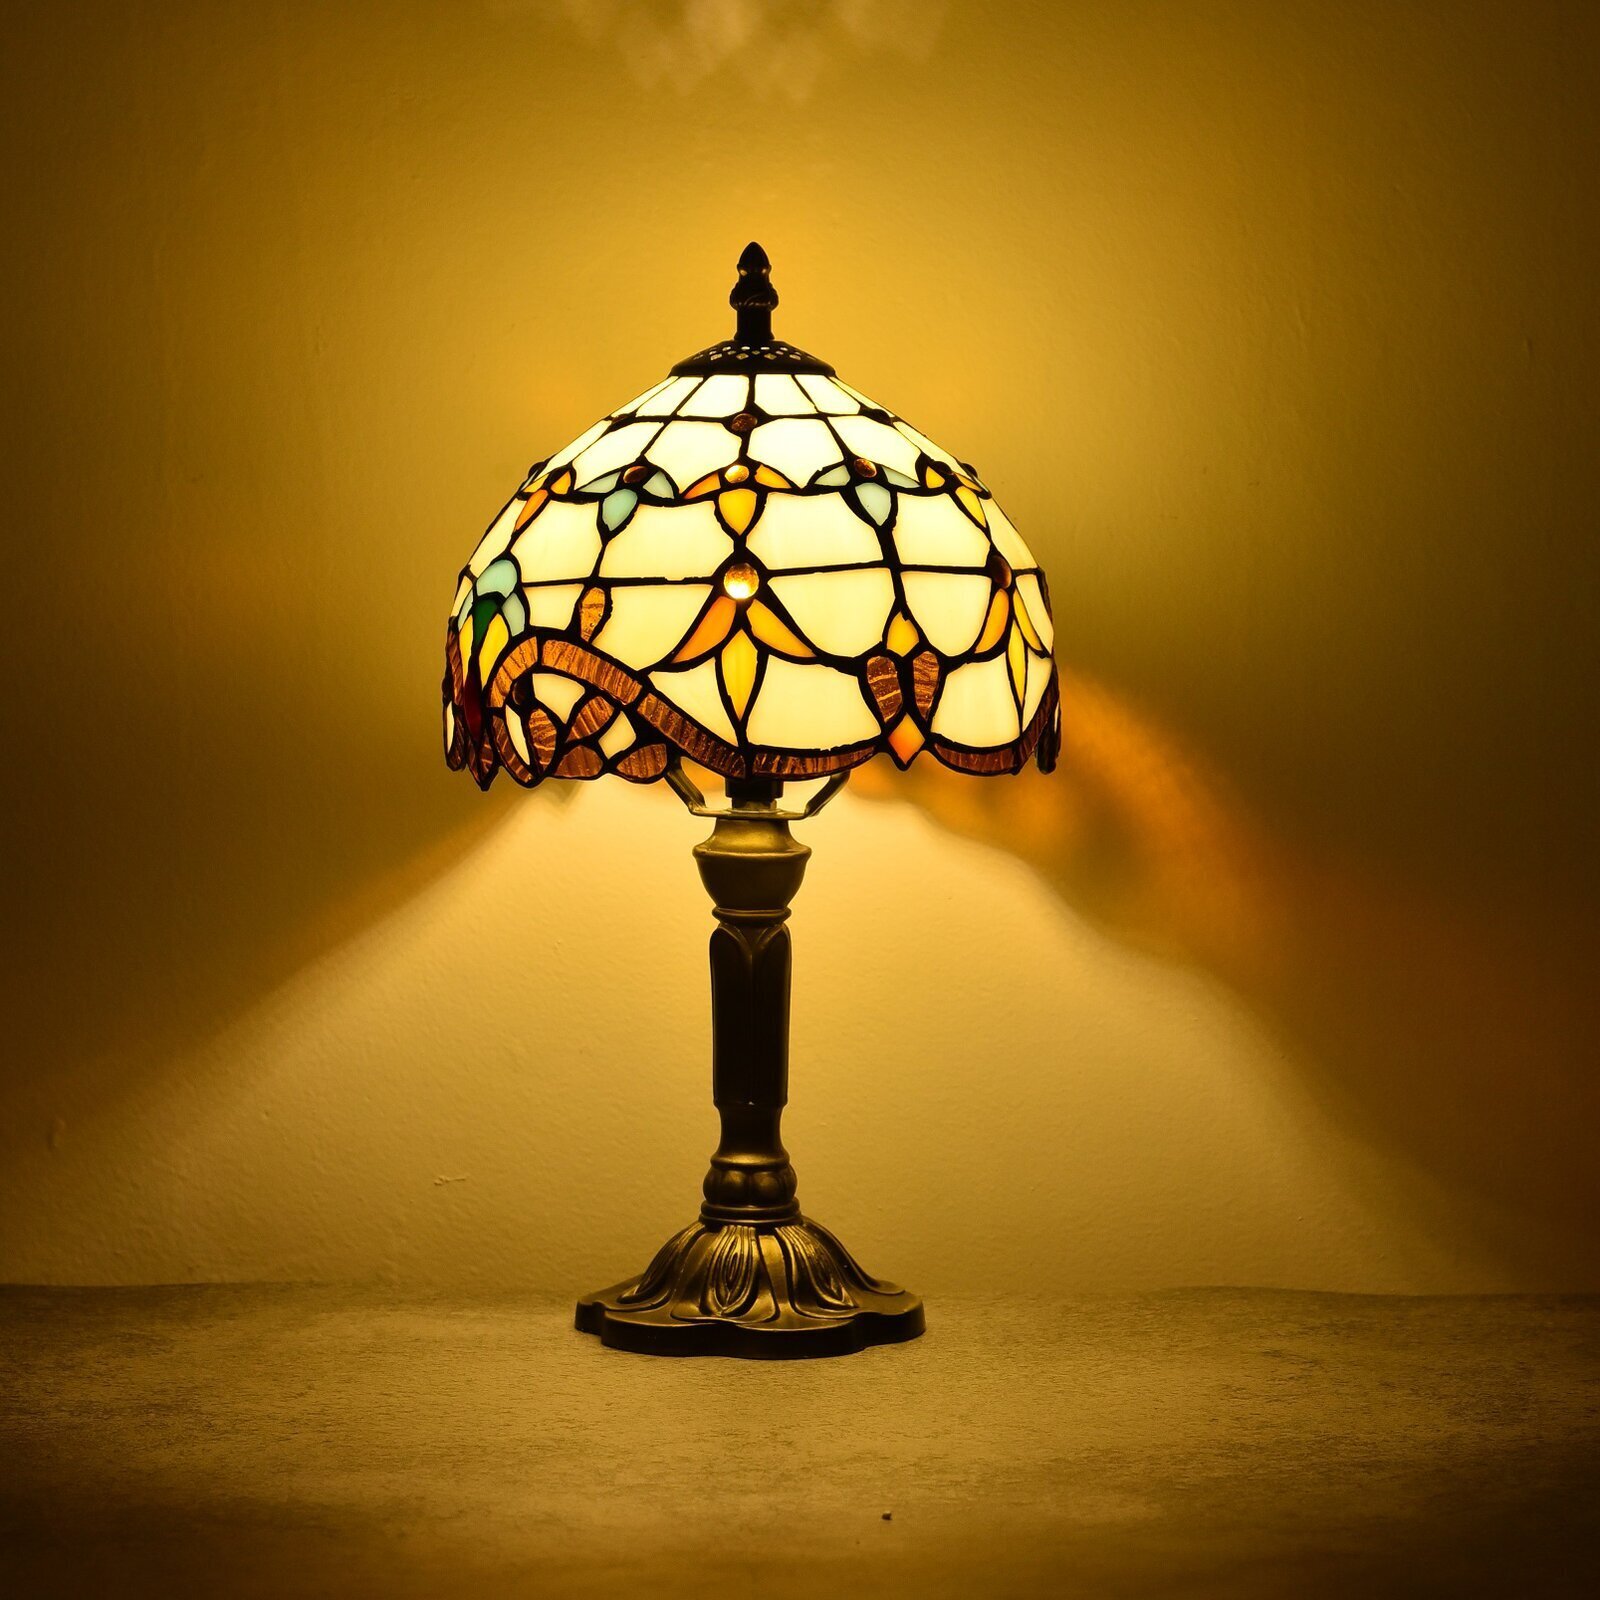 Tiffany lotus lamp in a warm palette